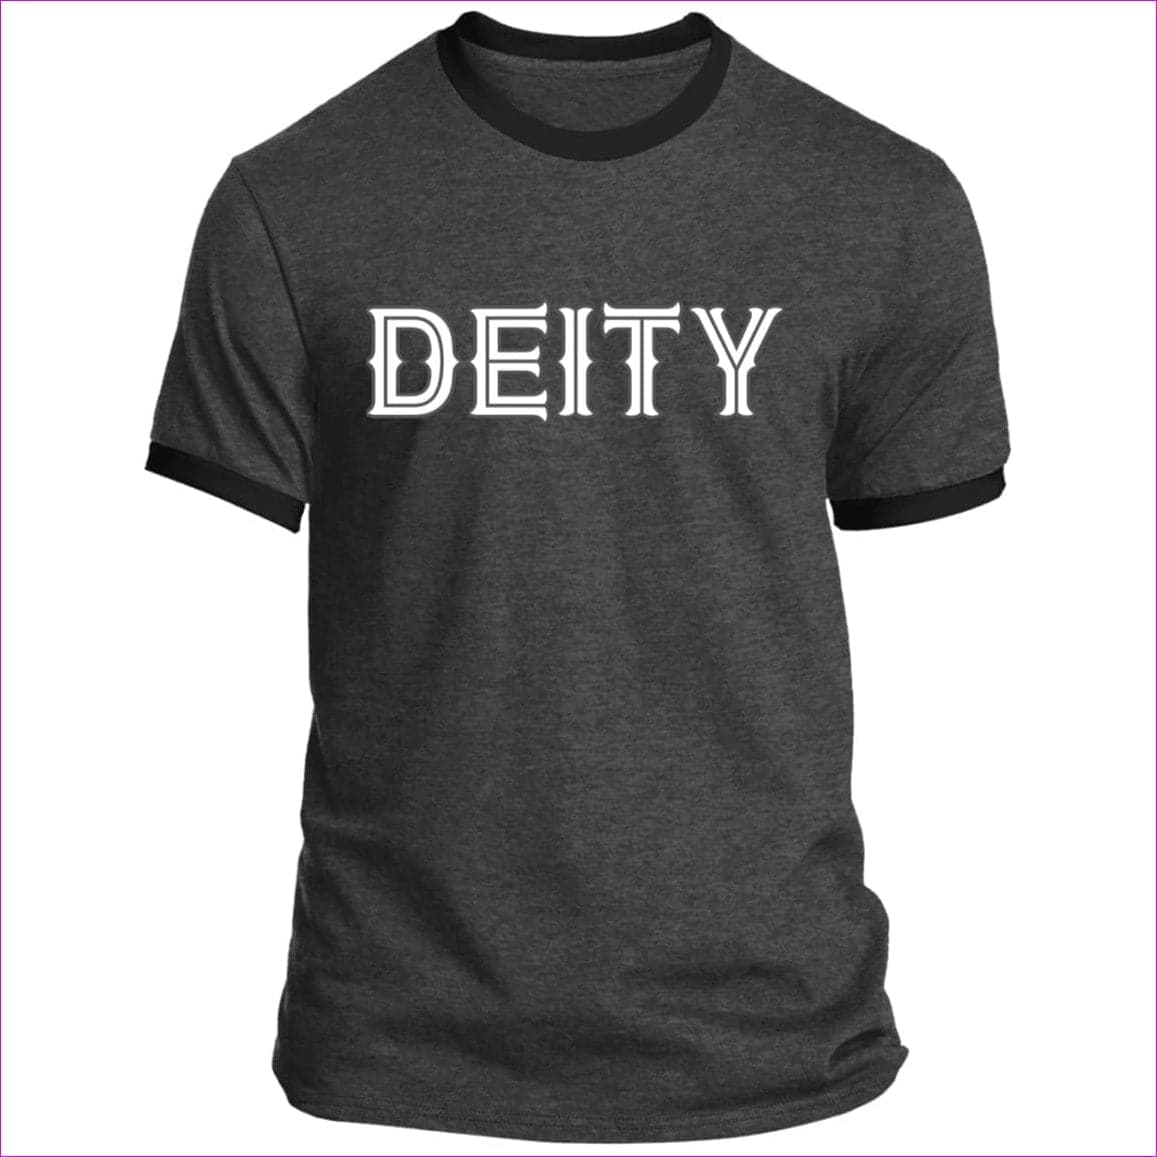 Dark Heather Jet Black - Deity Men's Ringer Tee - Mens T-Shirts at TFC&H Co.